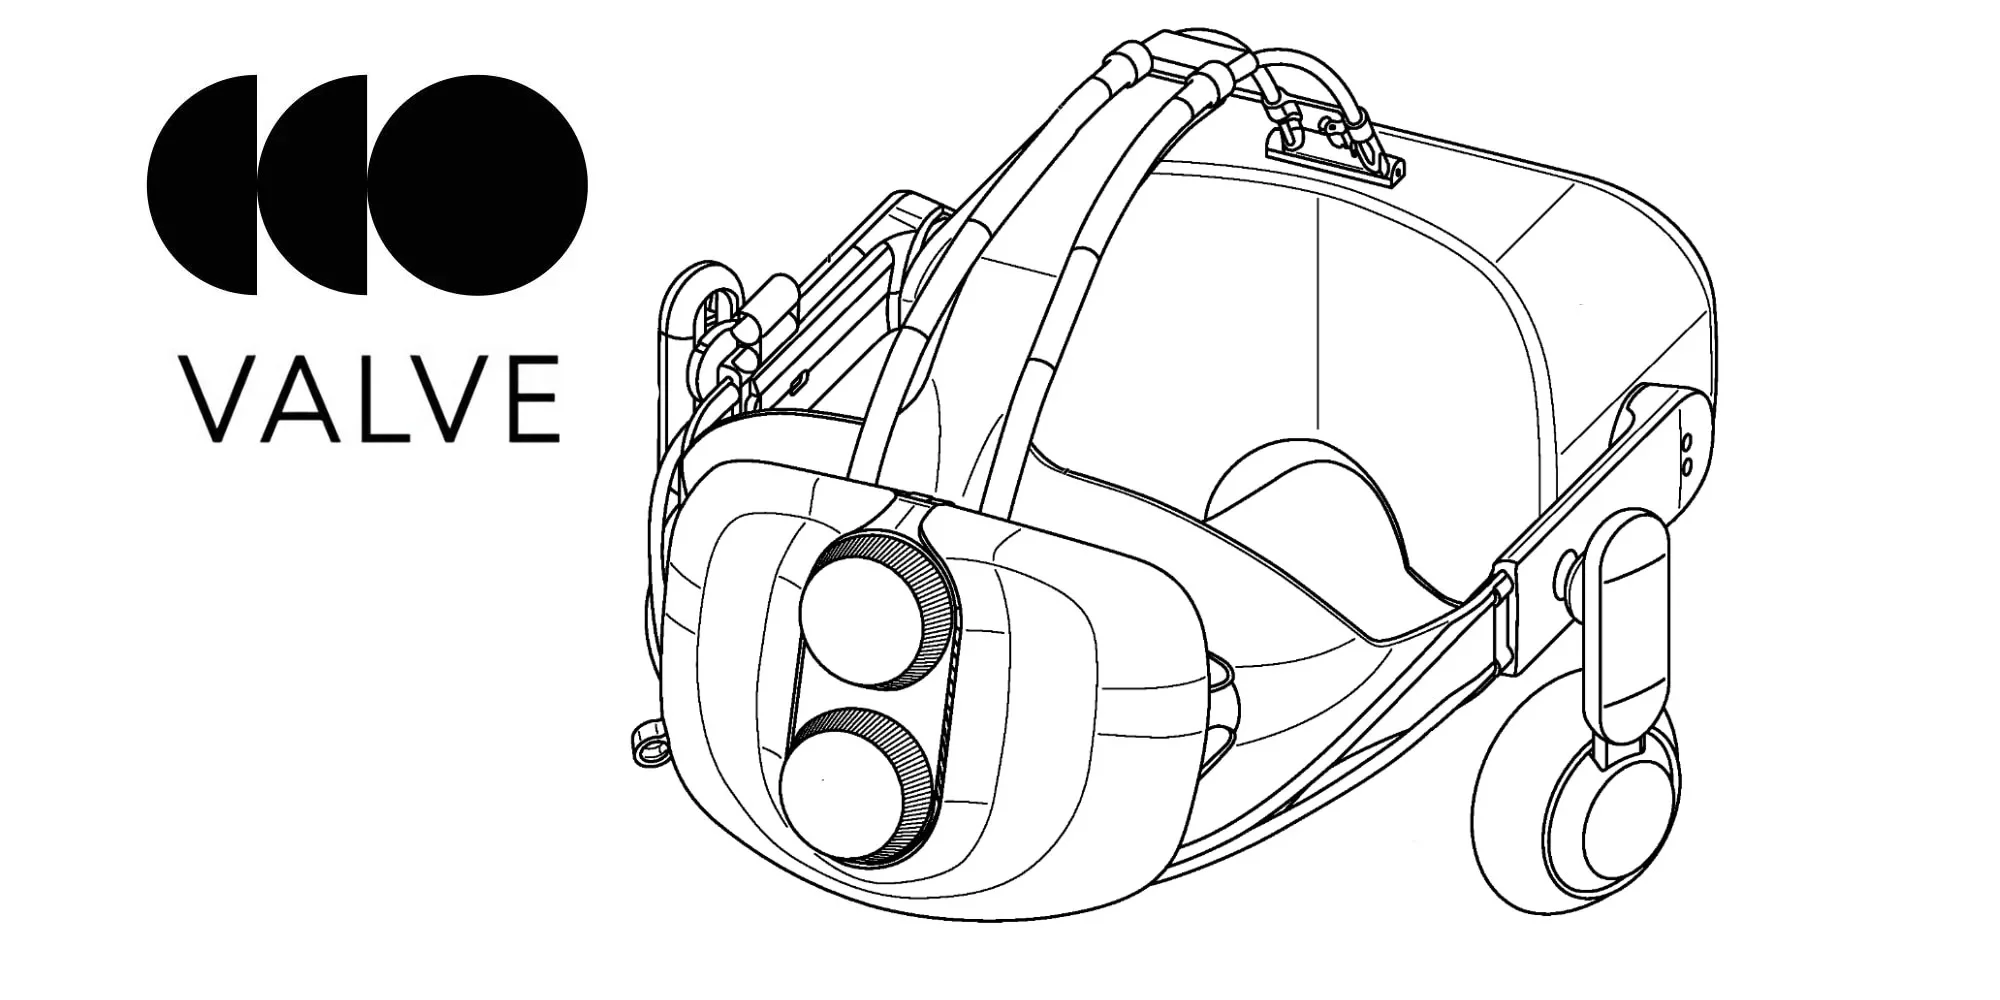 Valve VR headset back headstrap